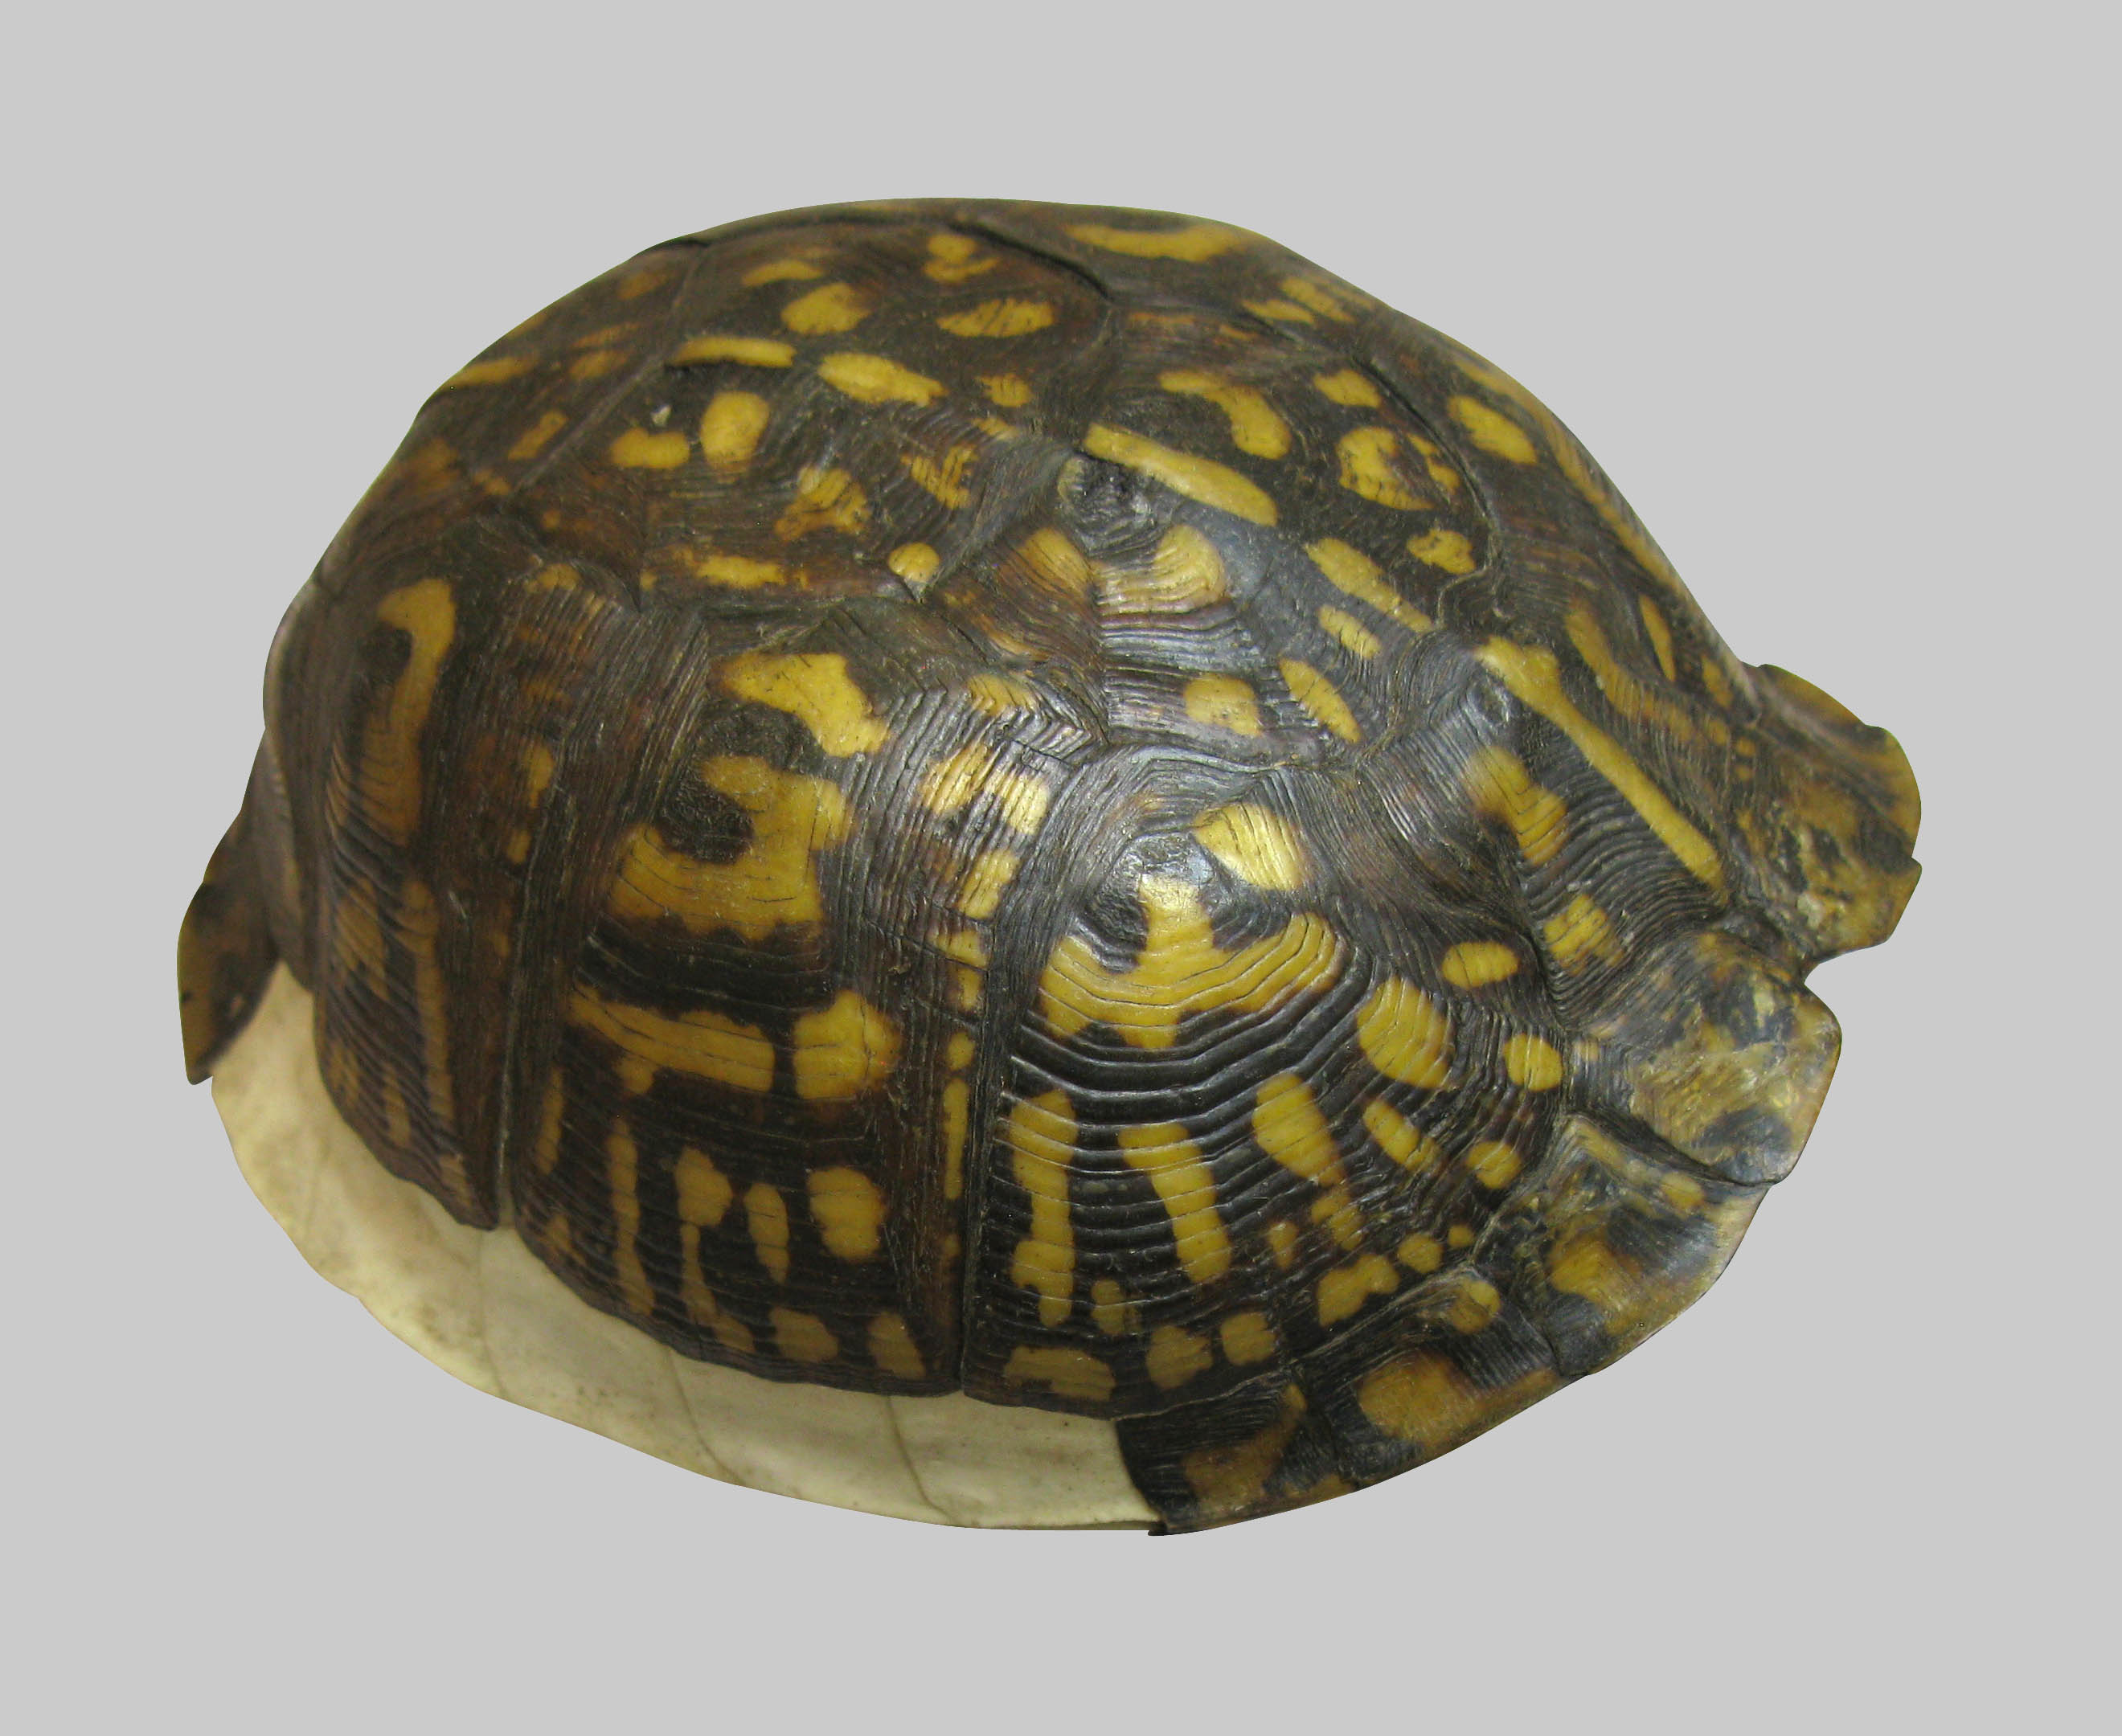 Box Turtle (Terrapene sp.) Carapace